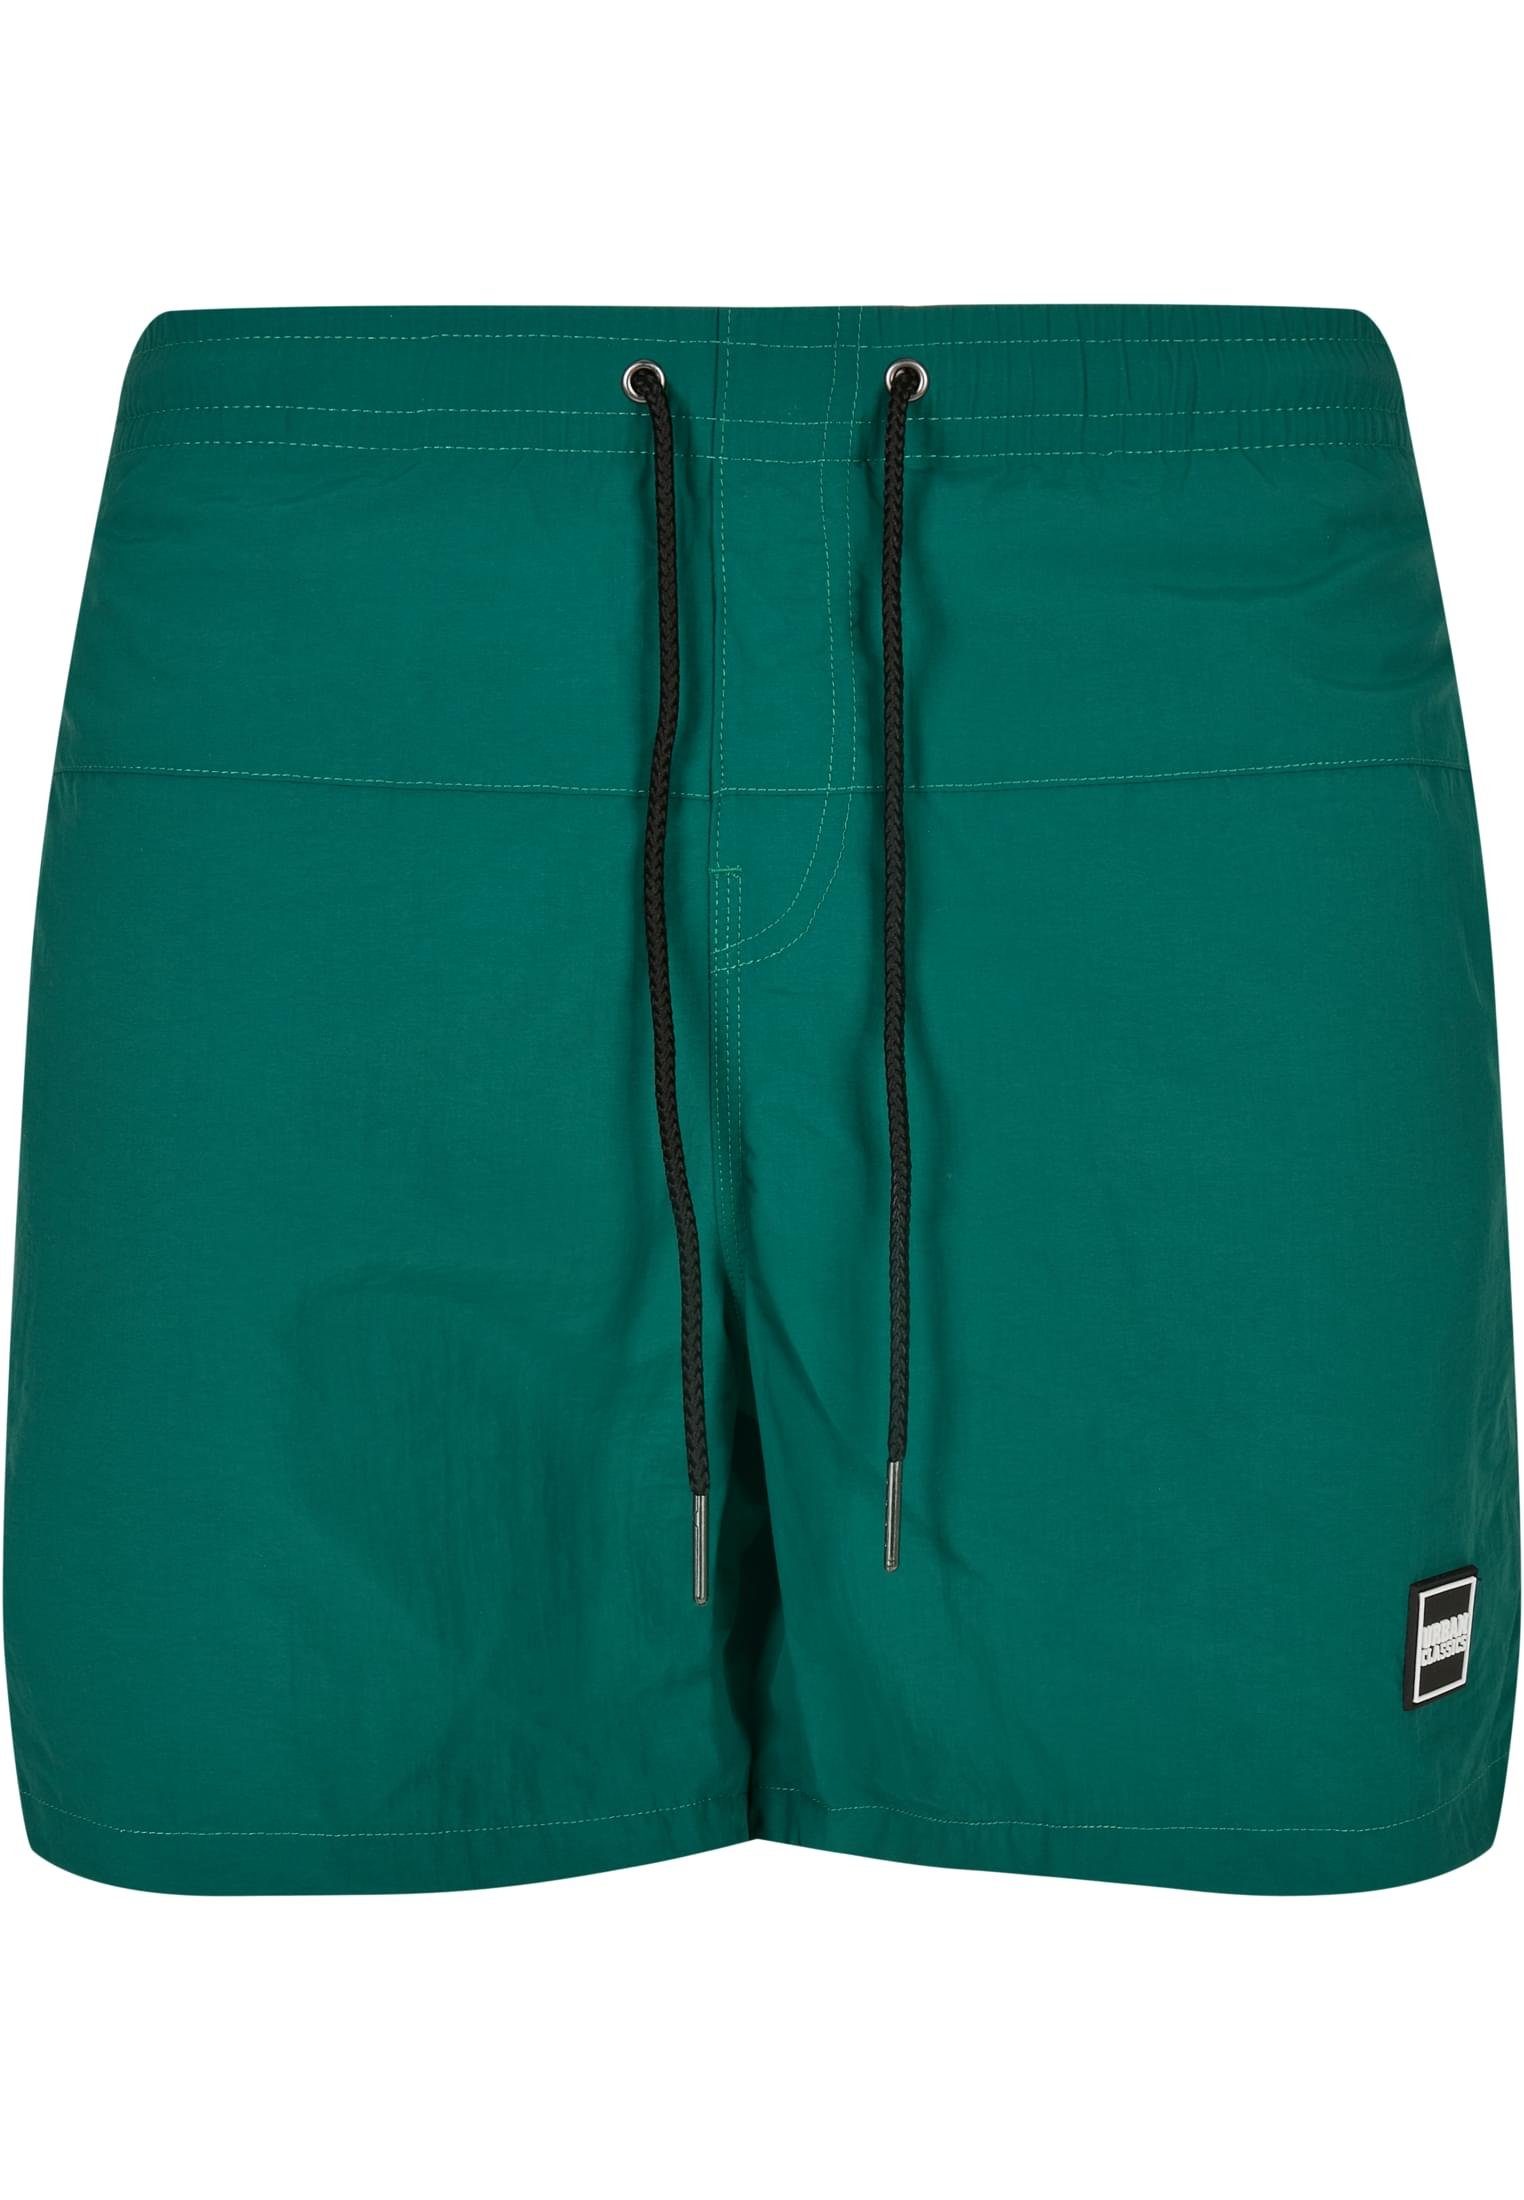 URBAN CLASSICS Badeshorts Shorts green Swim Herren